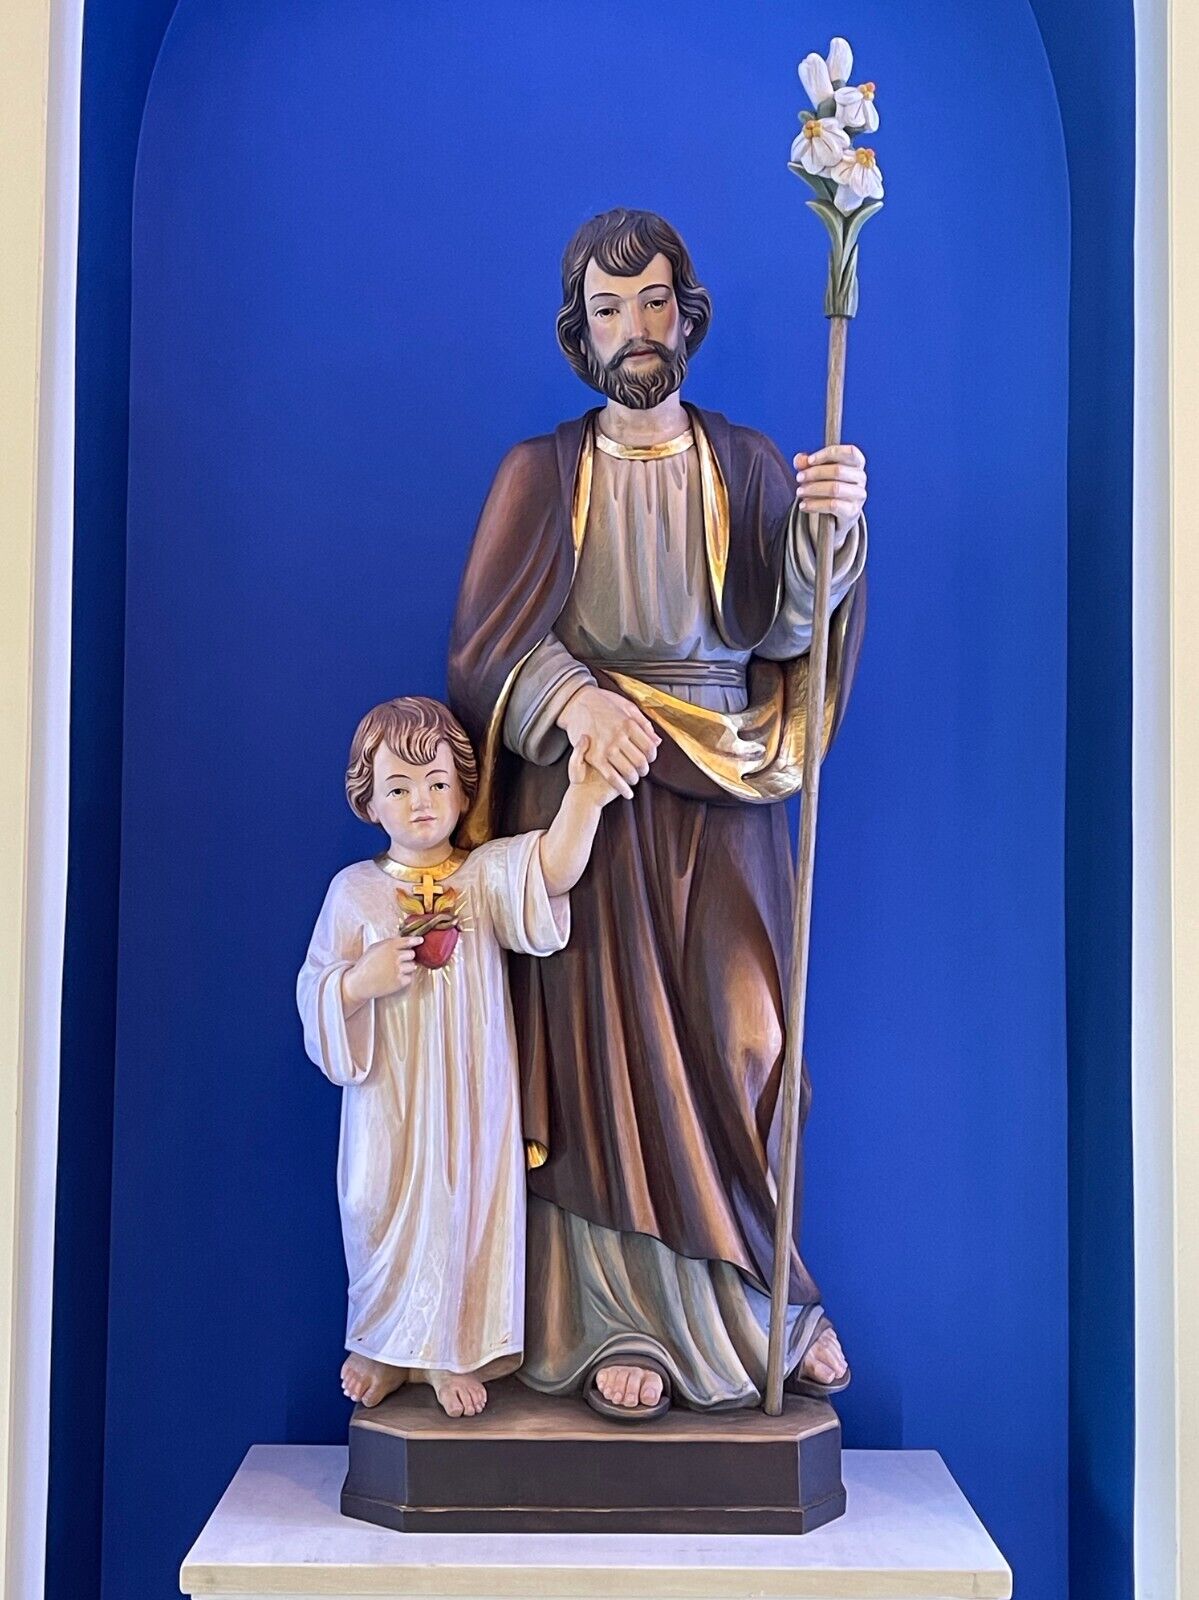 St. Joseph w Jesus Hand Carved Wood Religious Statue 47